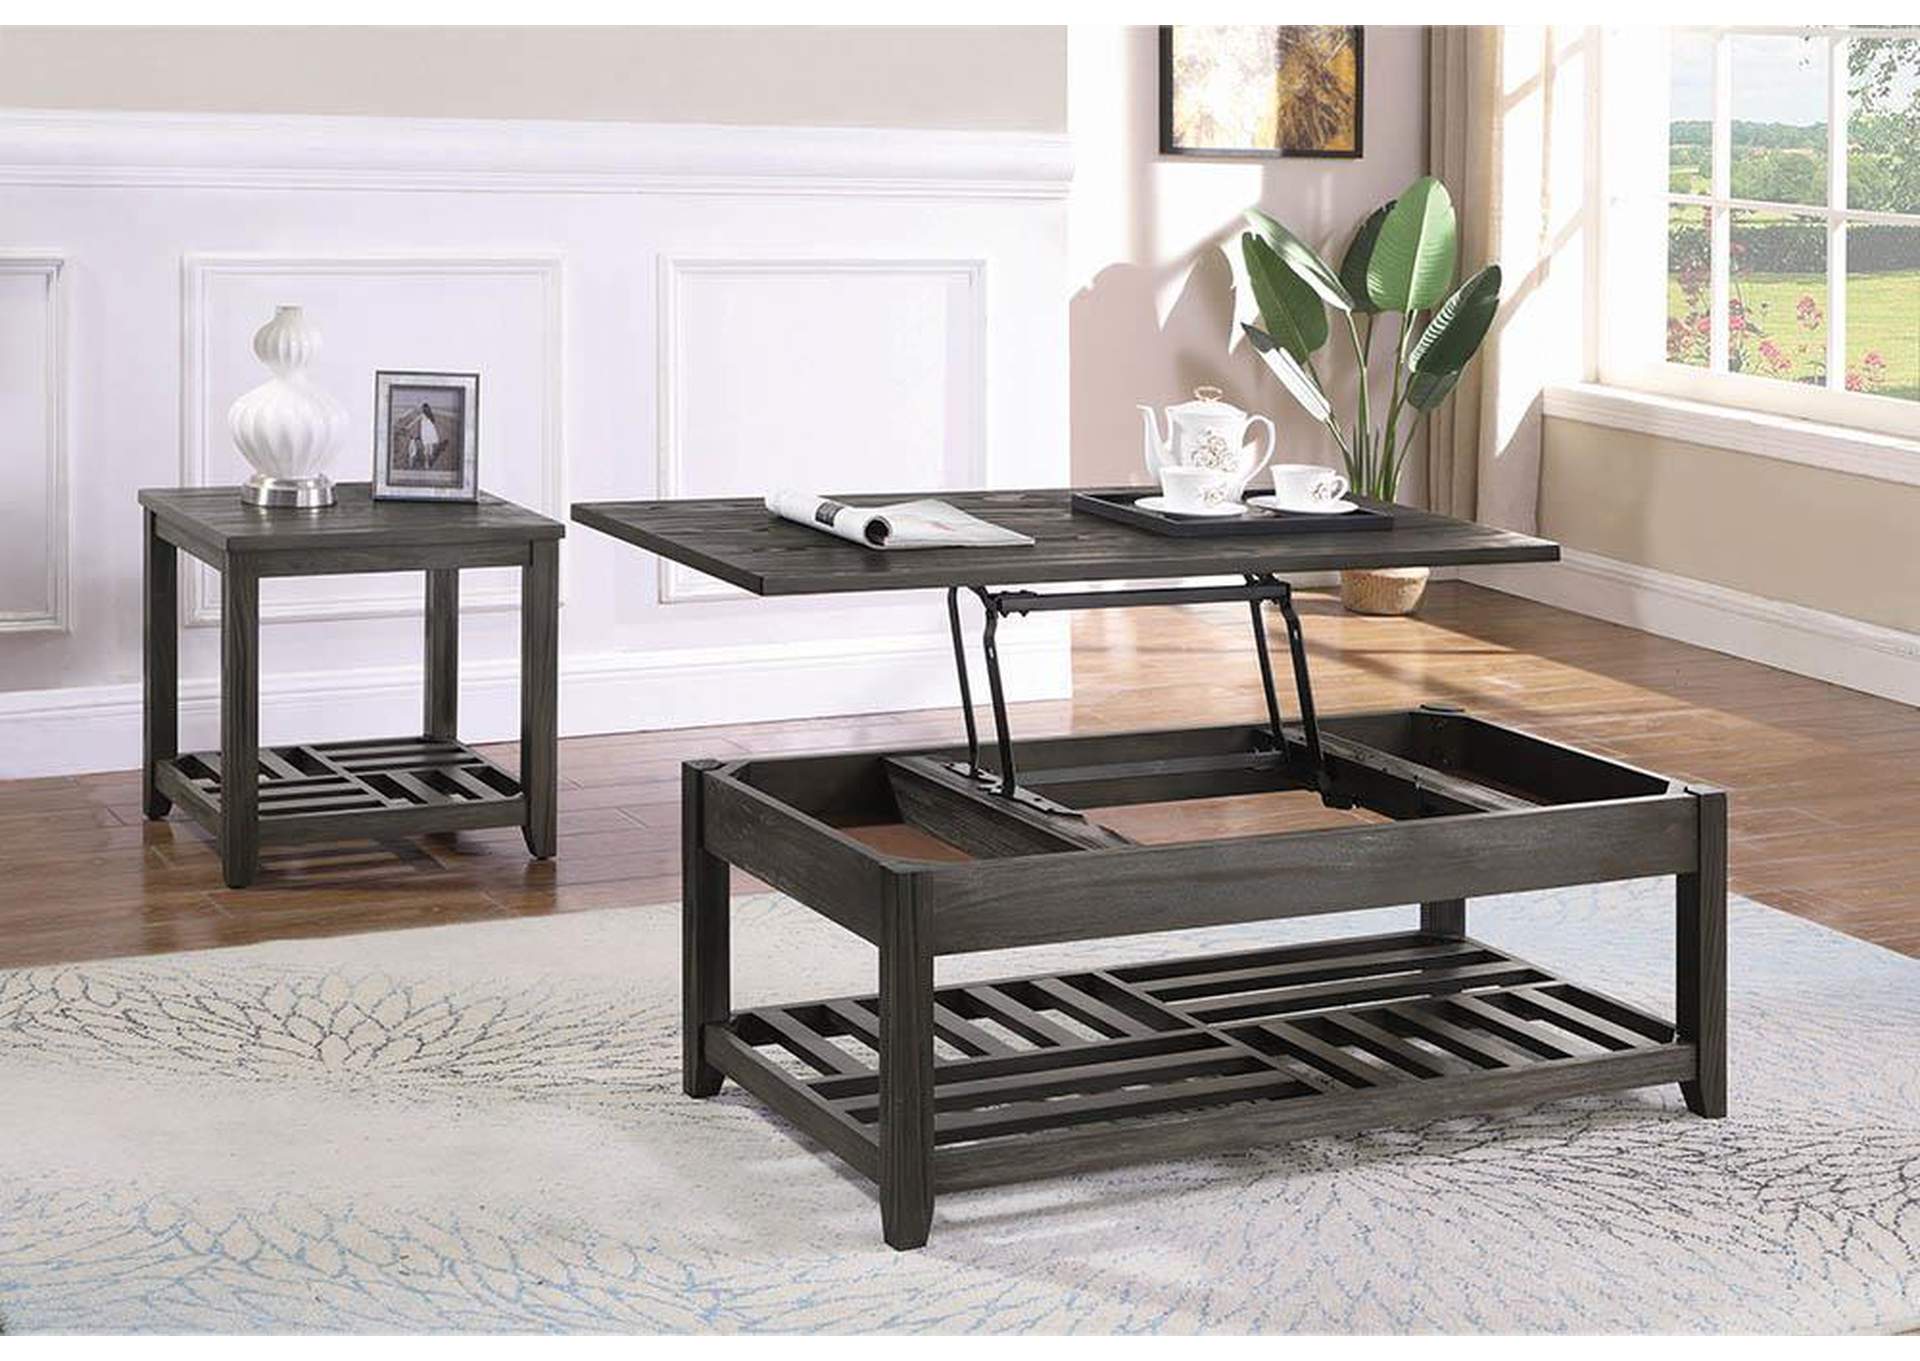 Rustic Grey Side Table,Coaster Furniture